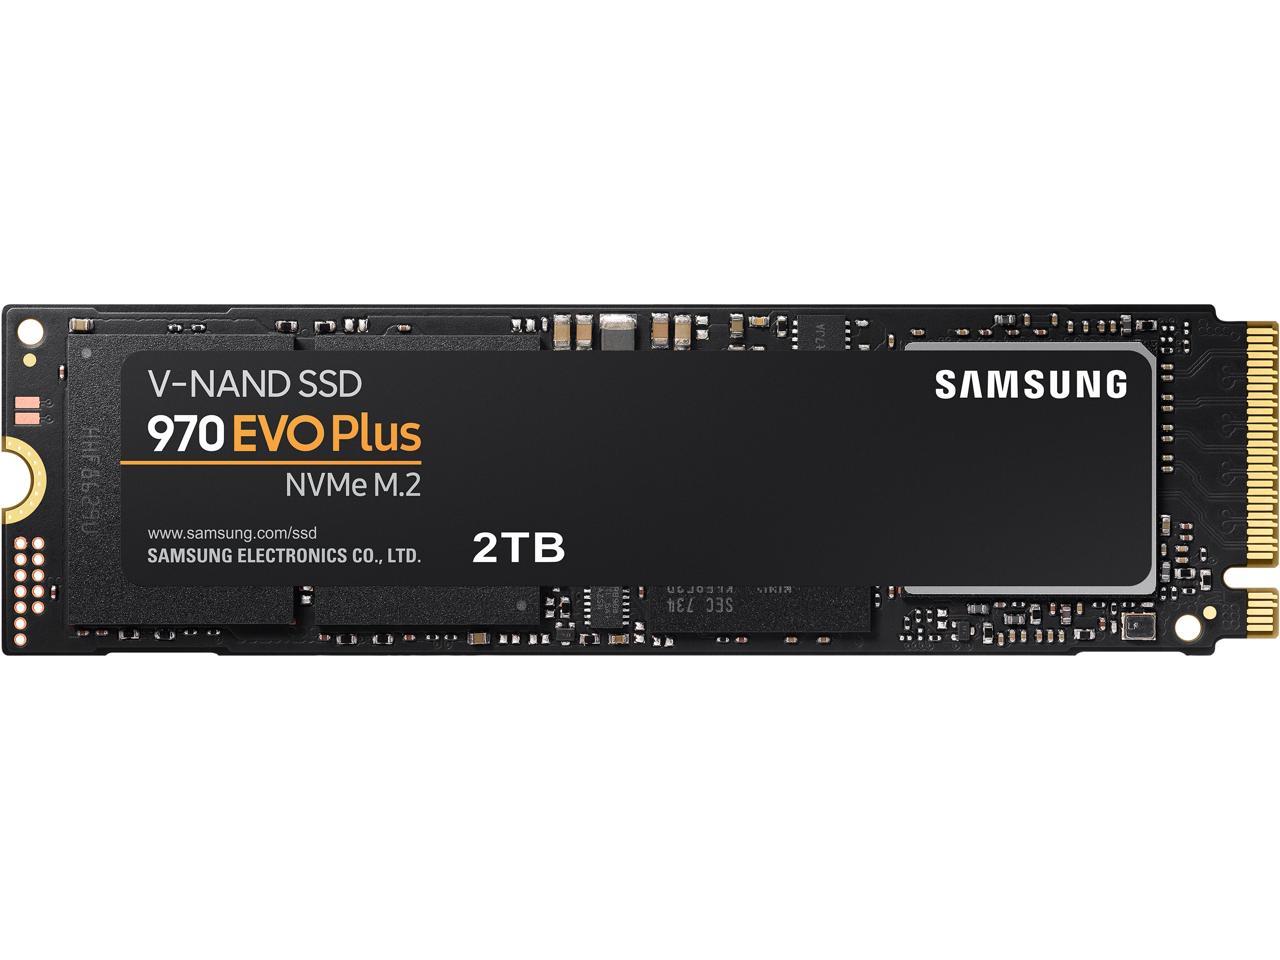 2TB SAMSUNG 970 EVO PLUS NVMe SSD @Newegg $195